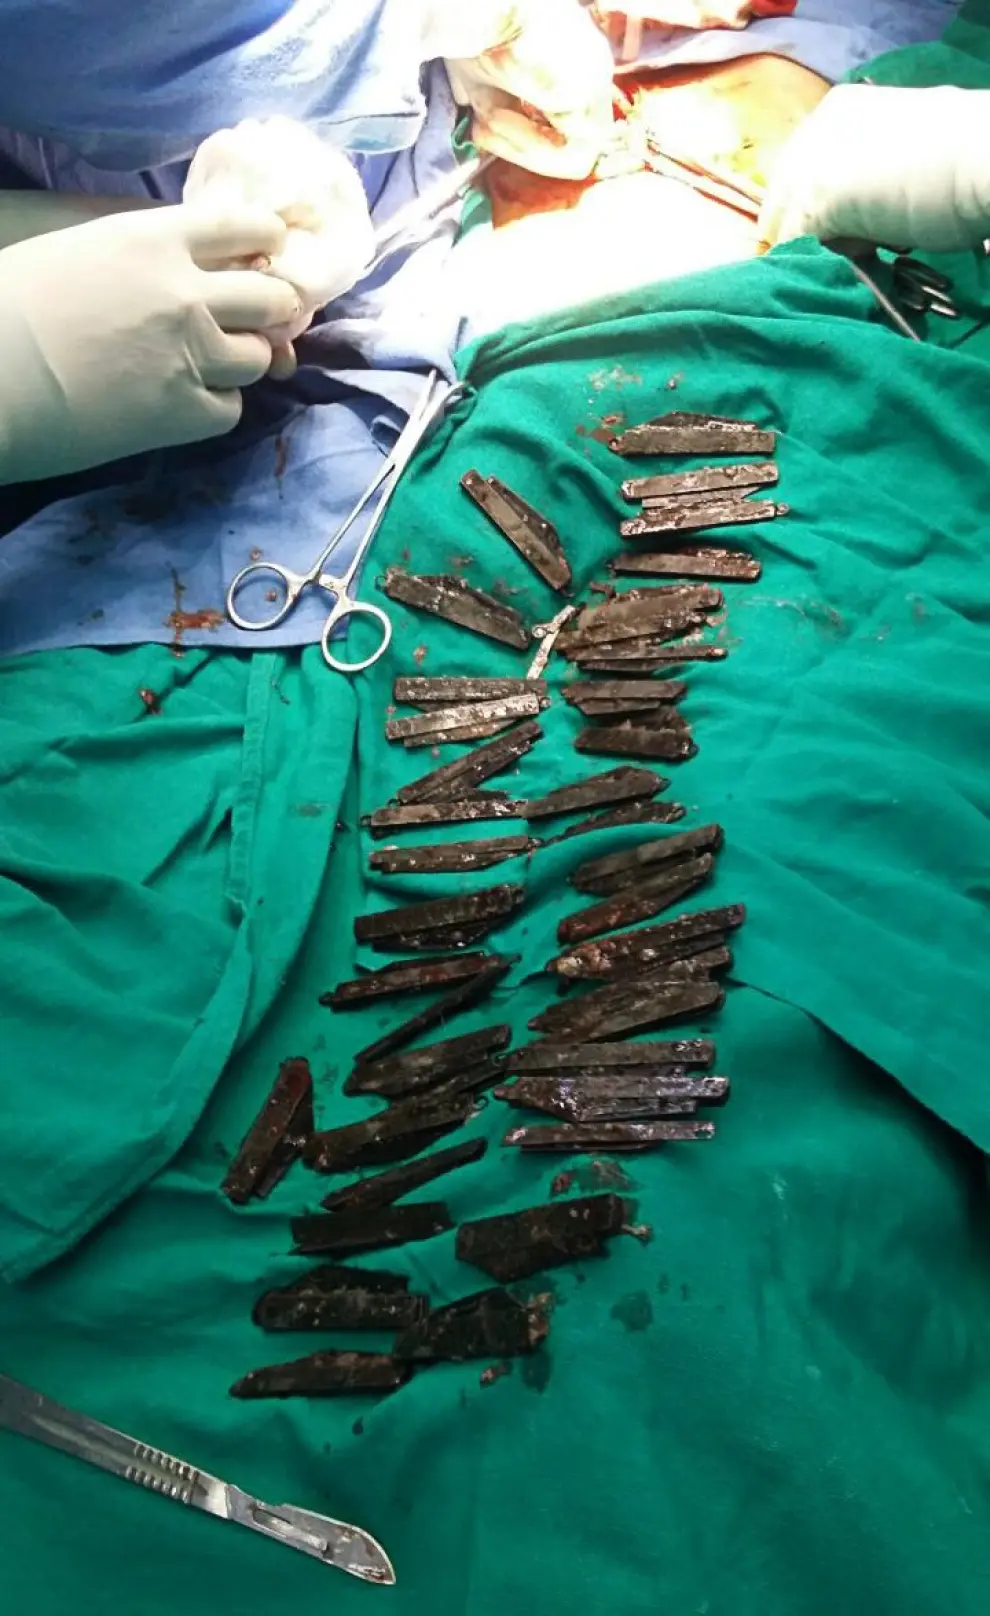 Cirujanos indios extraen 40 cuchillos del estómago e intestino de un paciente